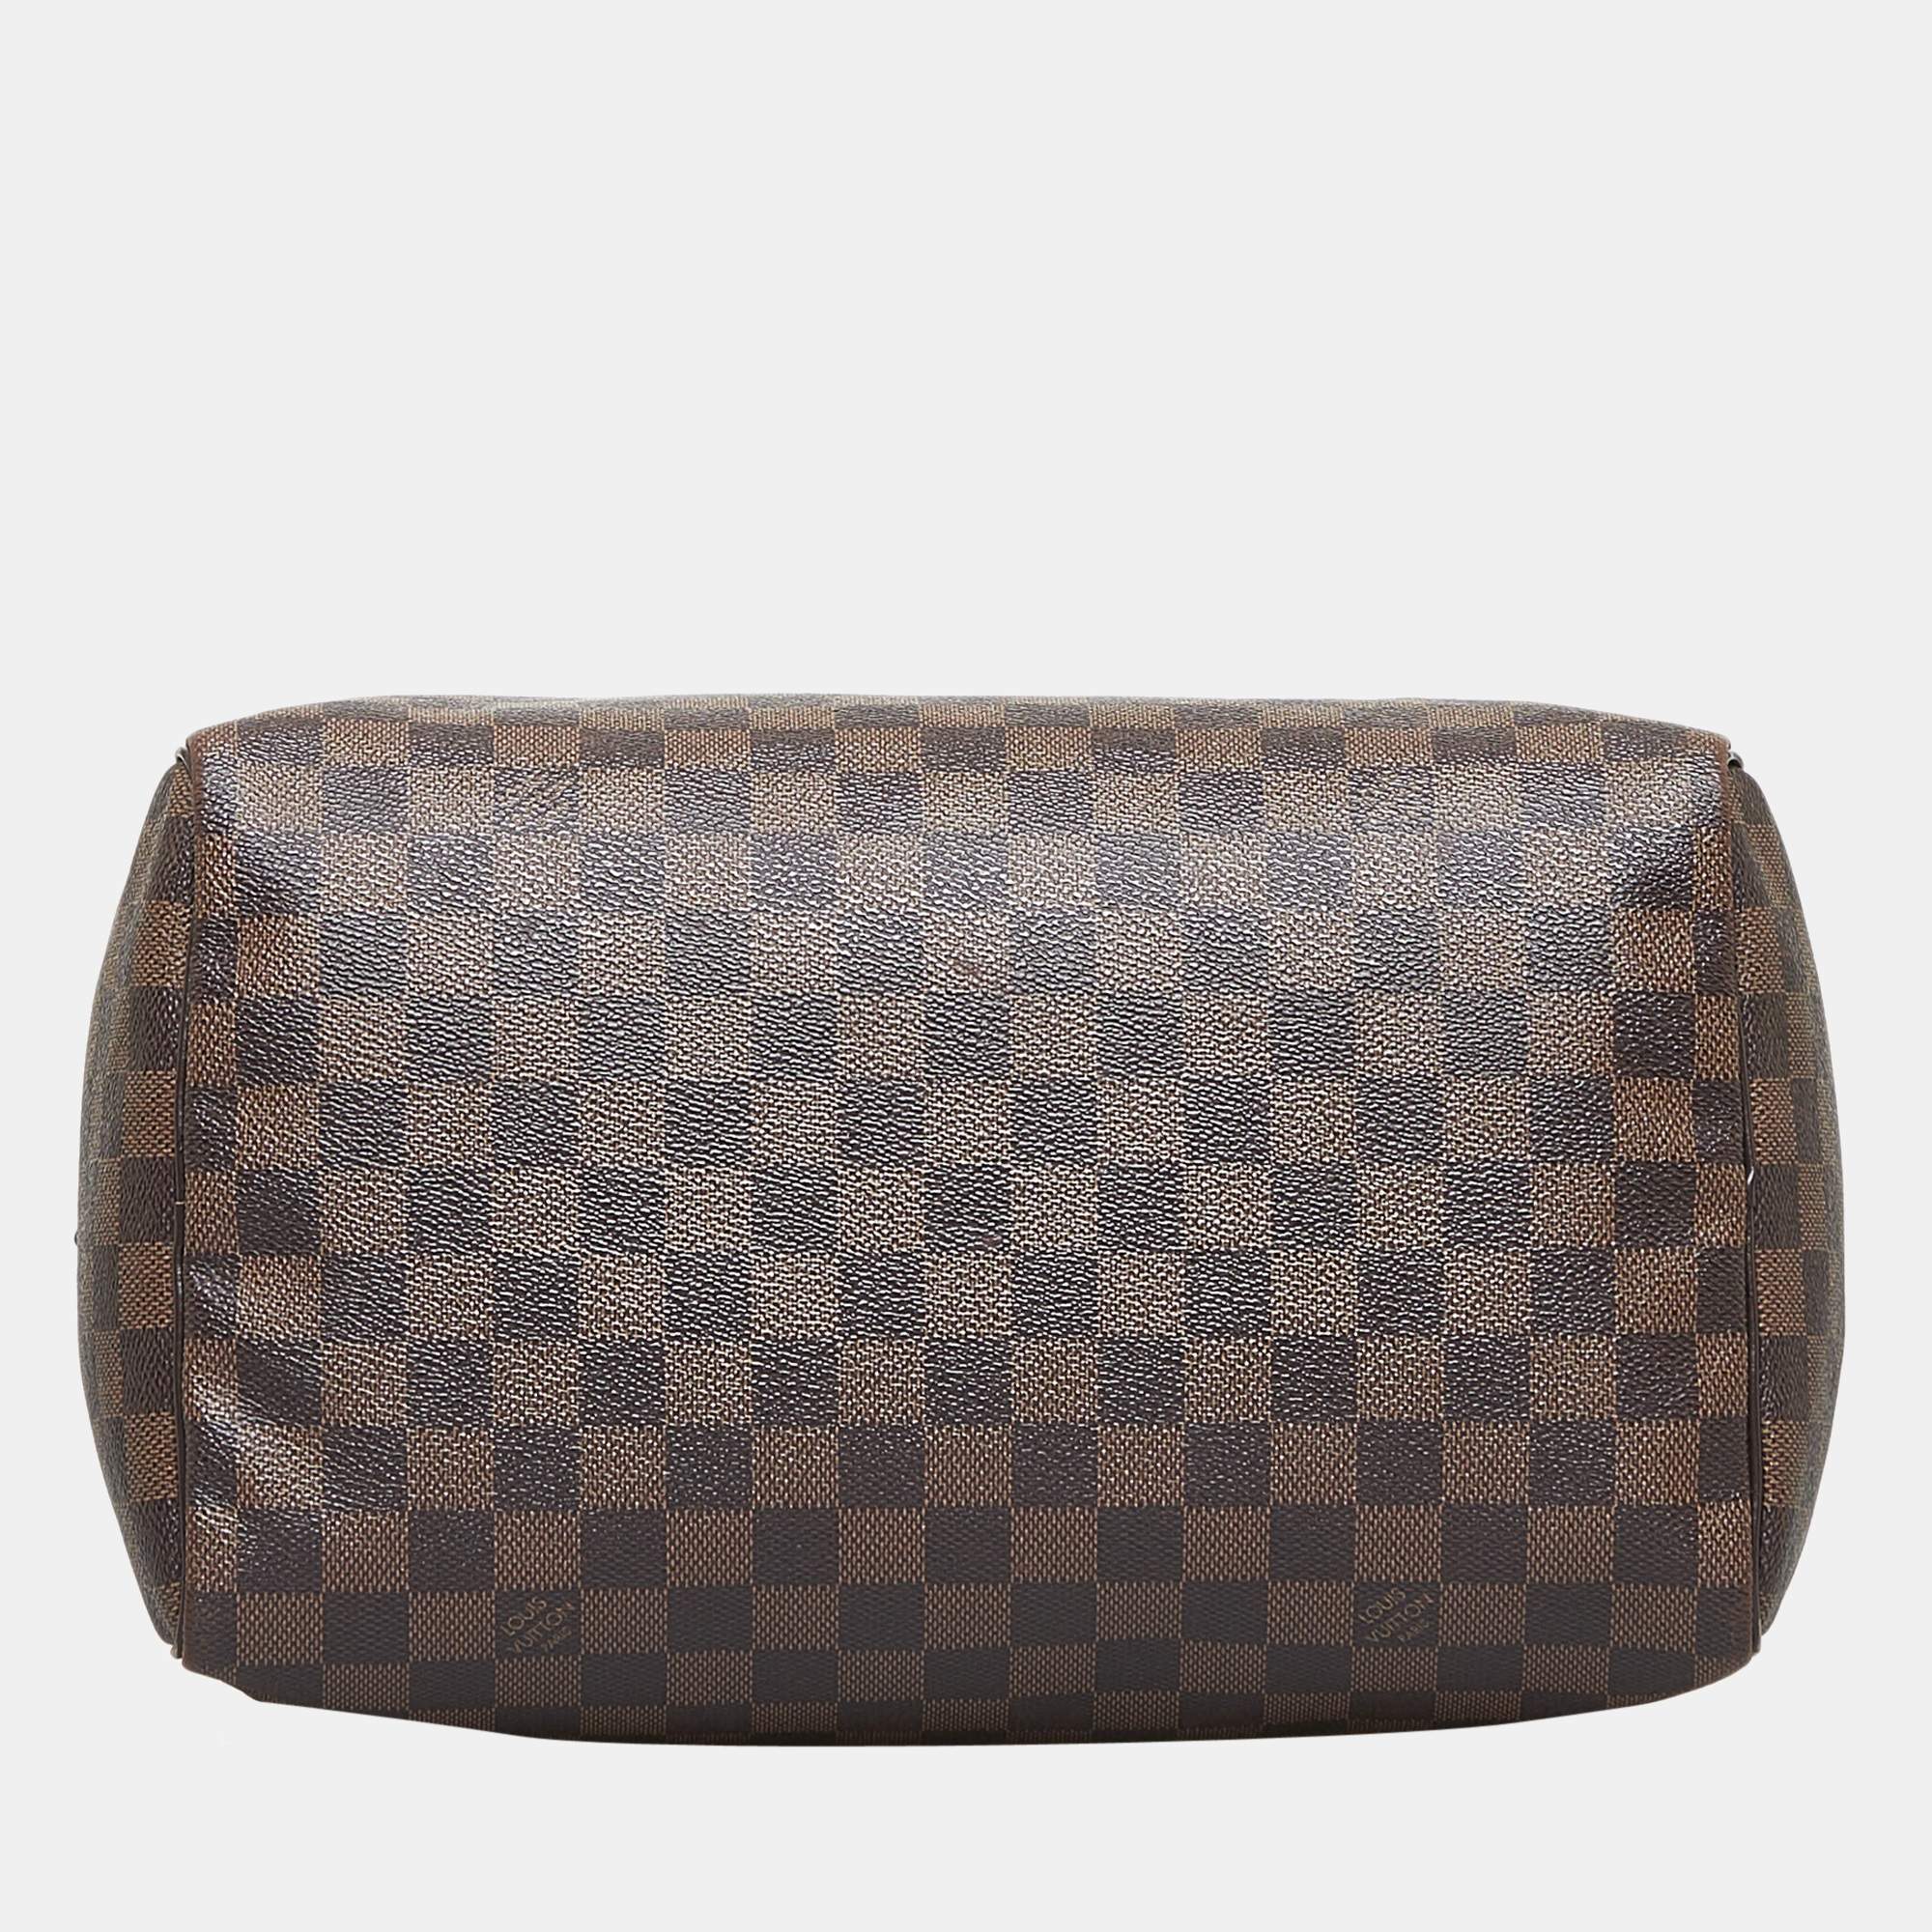 Louis Vuitton Speedy 30 Handbag in Ebene Damier Canvas and Brown